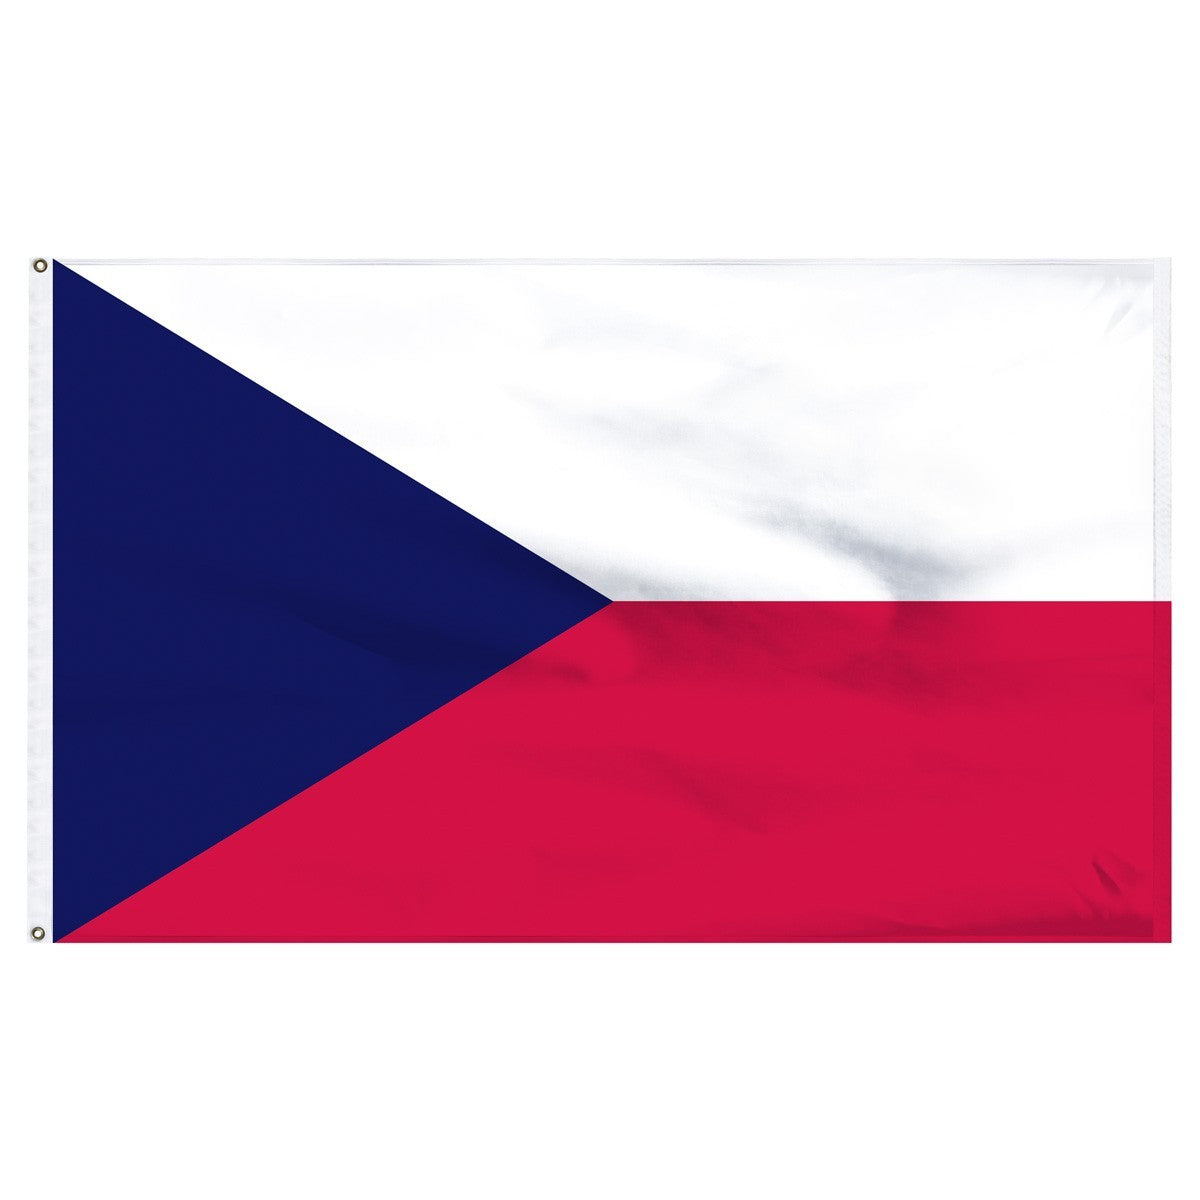 Shop for Czech Republic flag nylon outdoor for sale